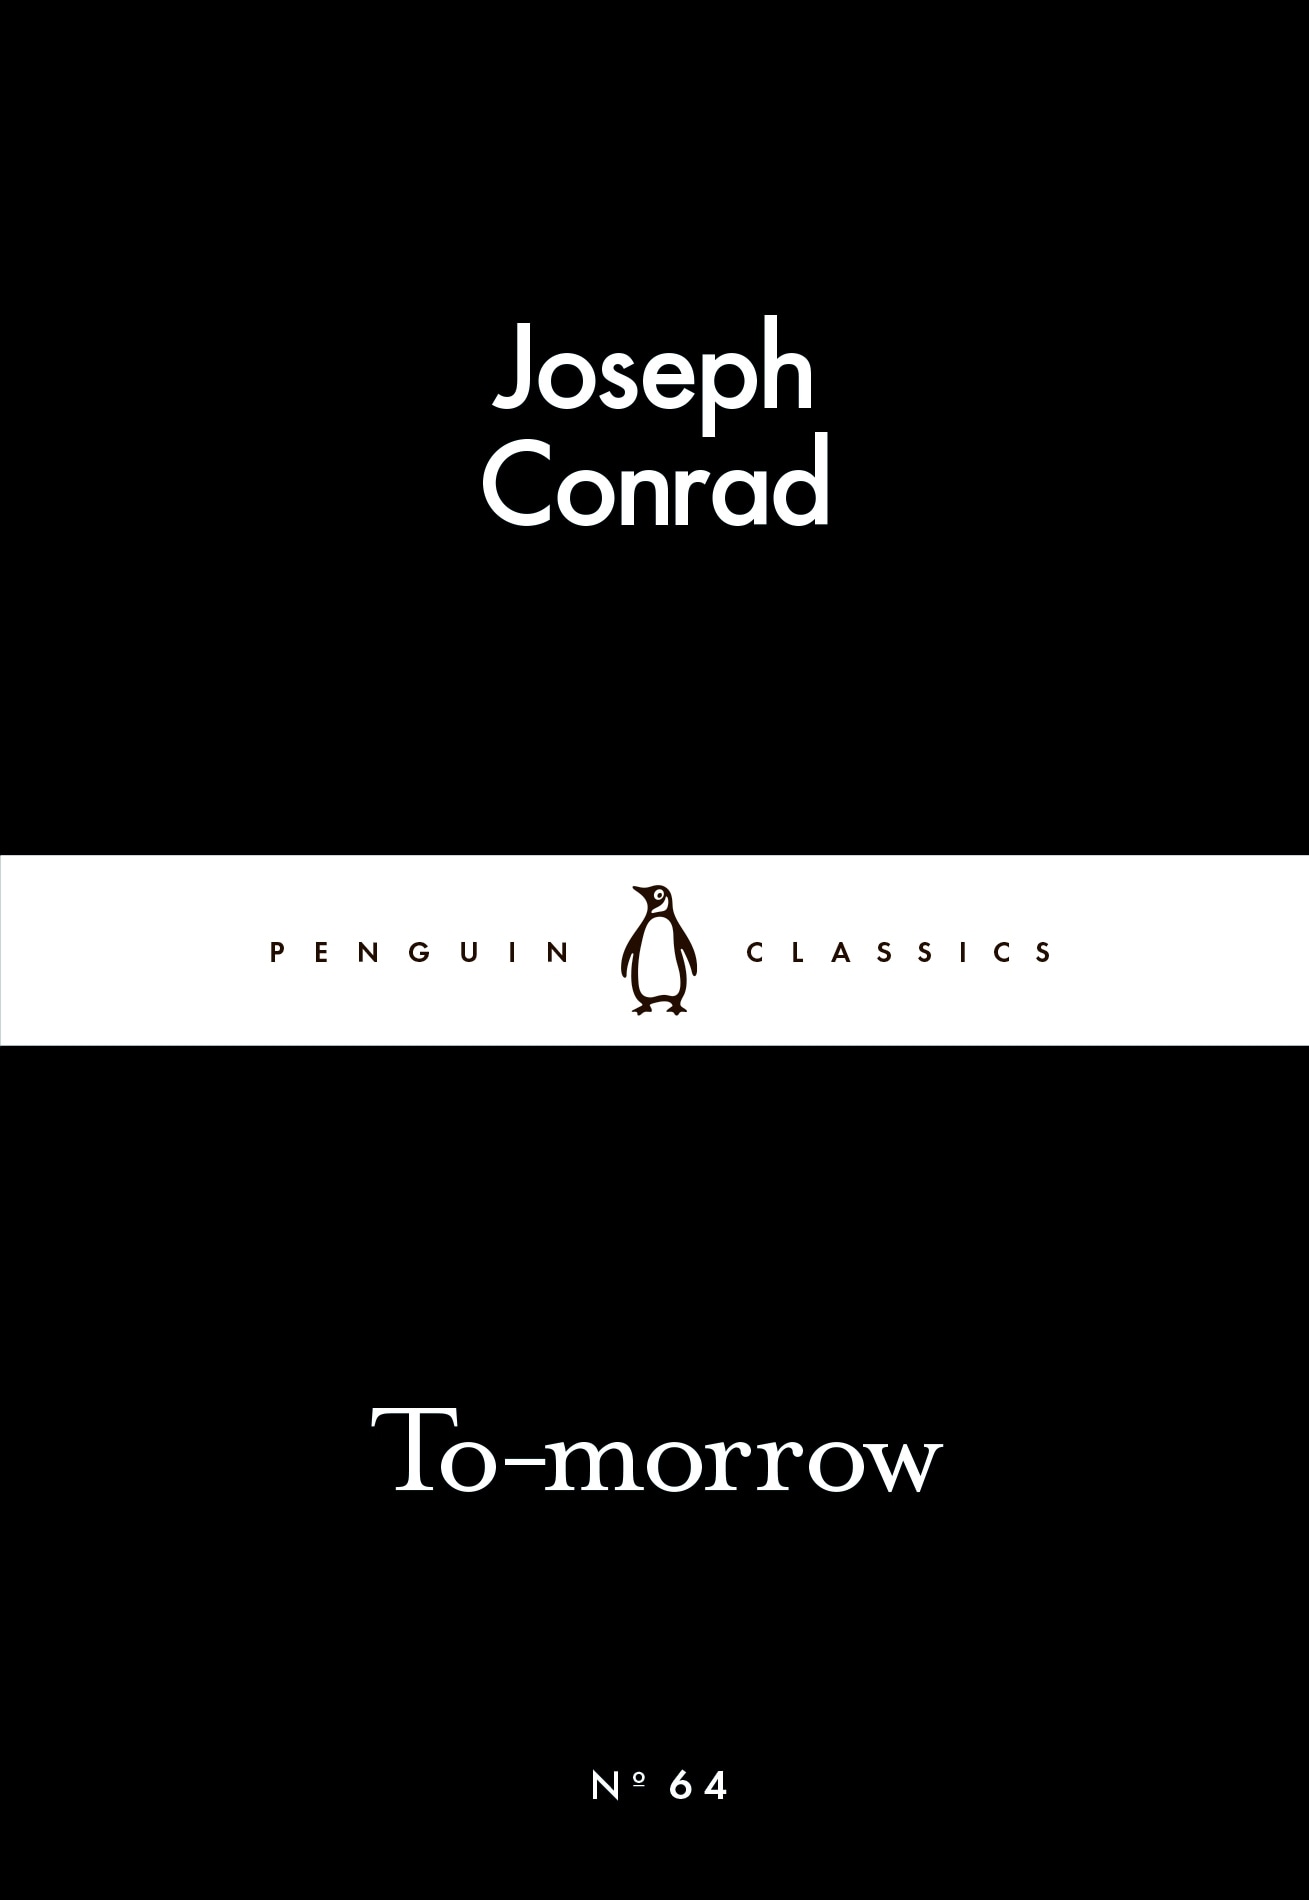 Book “To-morrow” by Joseph Conrad — February 26, 2015